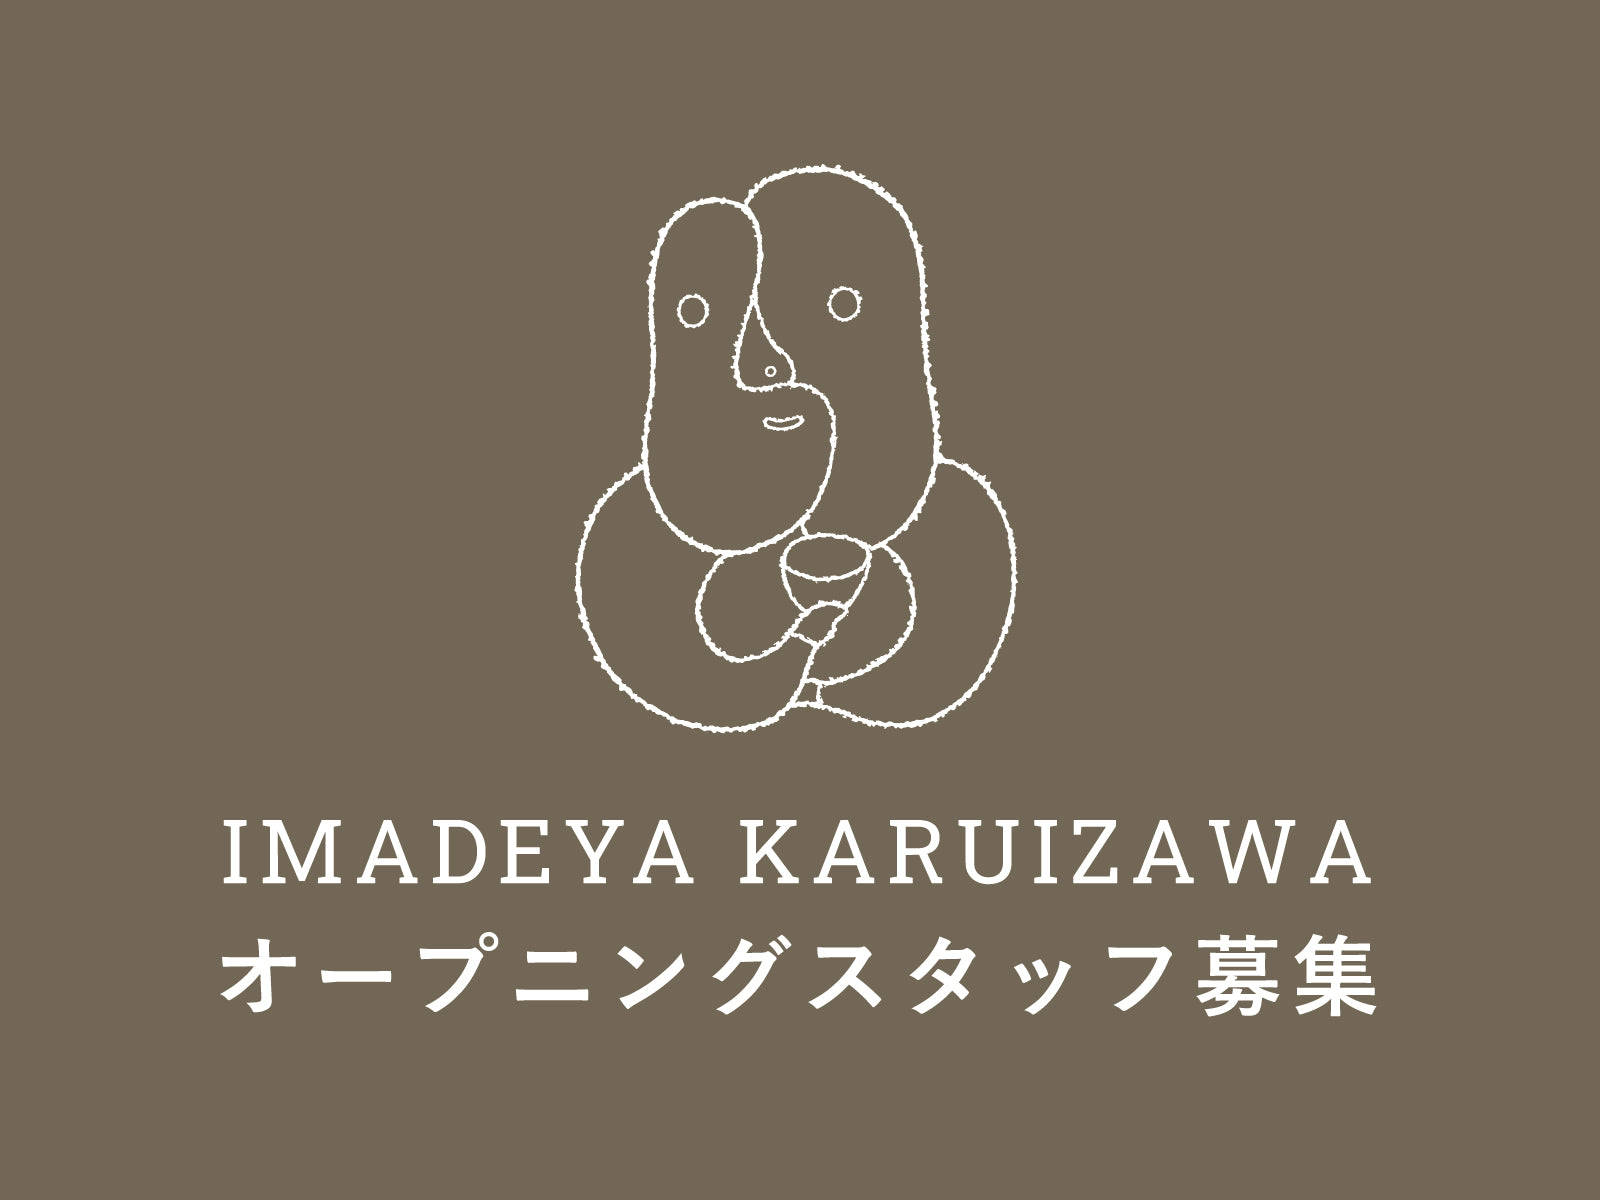 KARUIZAWA】オープニングスタッフ募集のお知らせ | IMADEYA